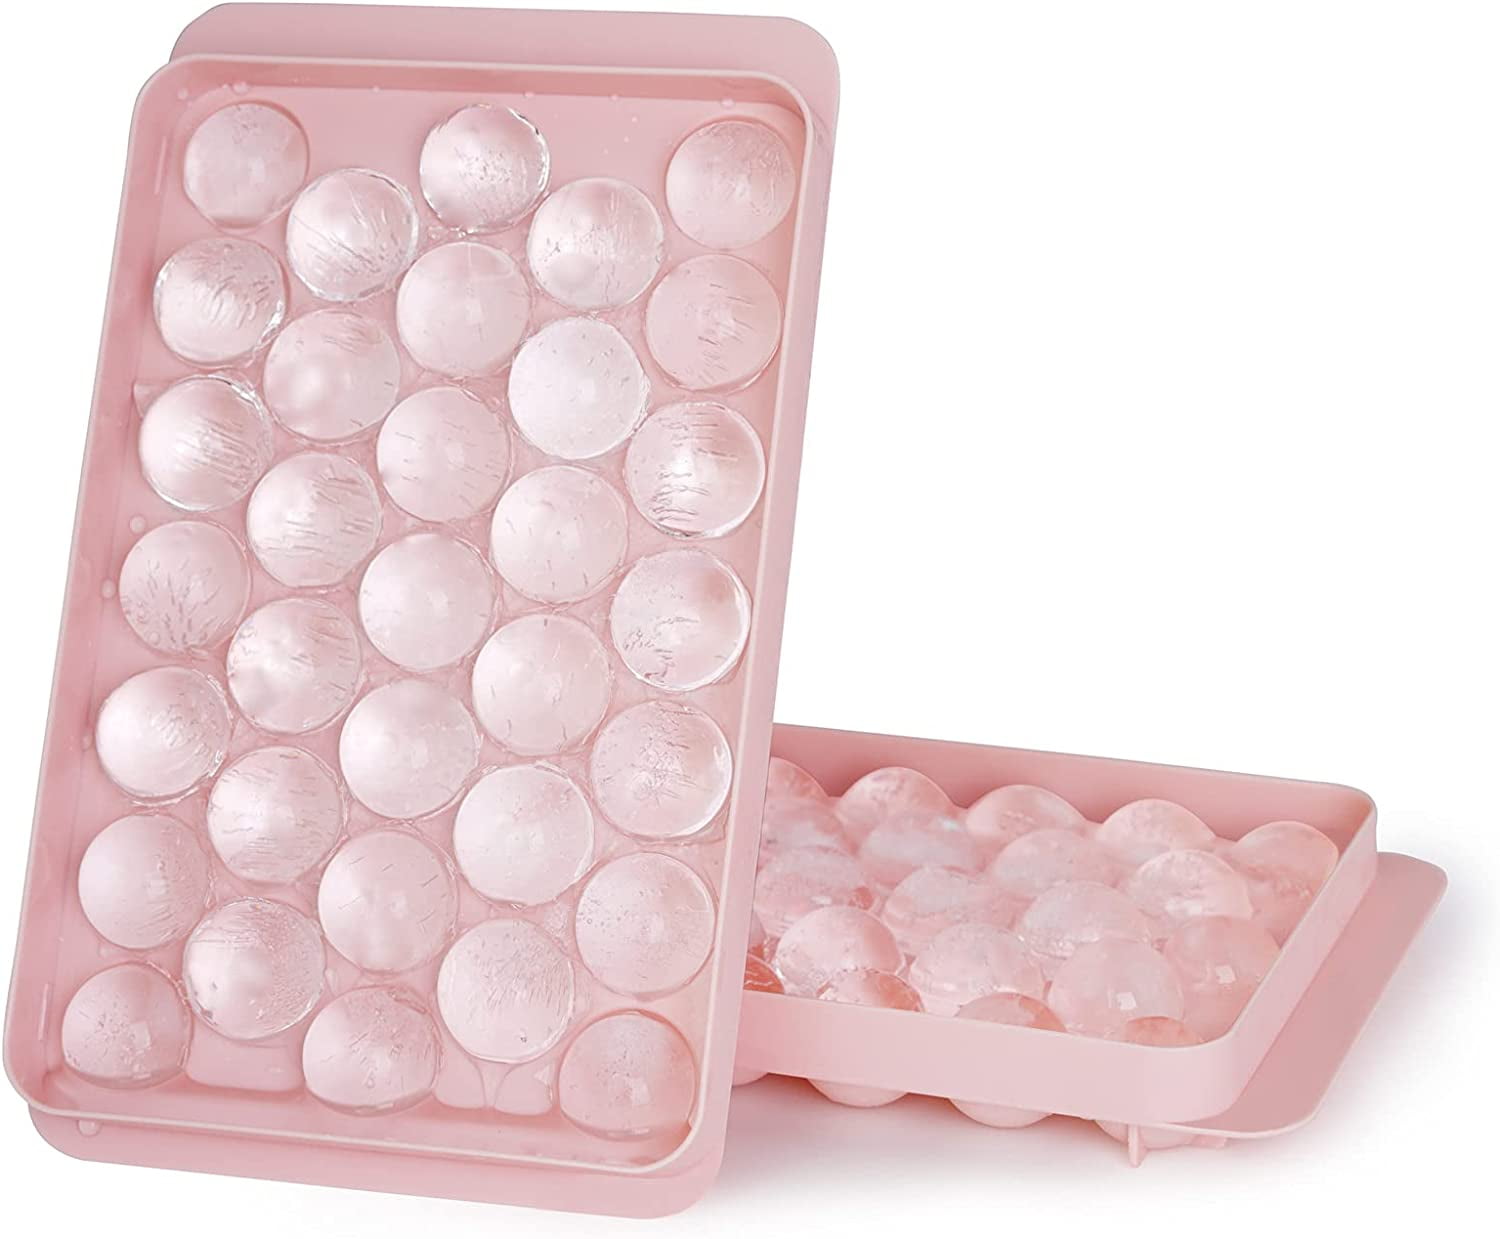 Flower/Fish Ice Cube Tray Mold 8 Cavity Pink Whim Cynthia Rowley 2 Trays